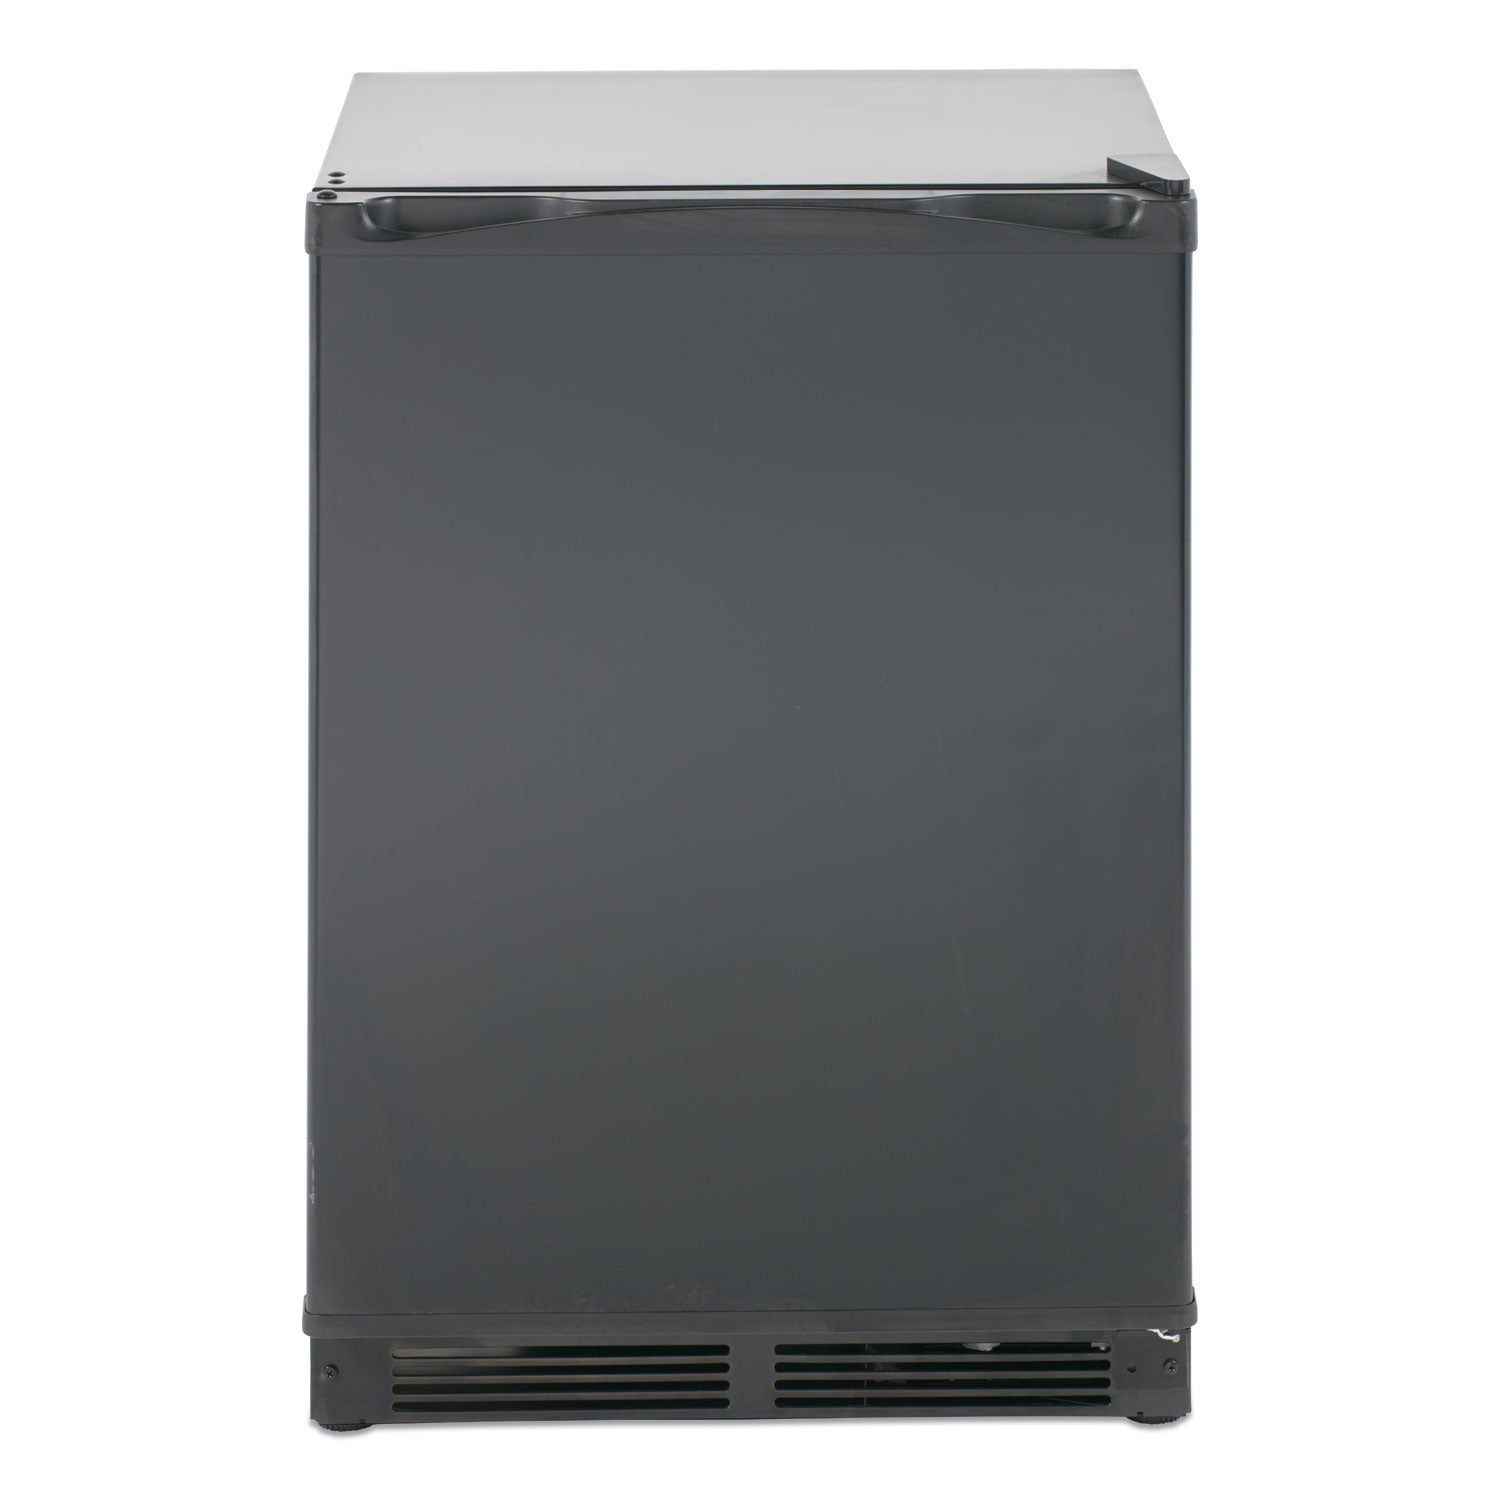 52-cu-ft-counter-height-refrigerator-black_avarm52t1bb - 2